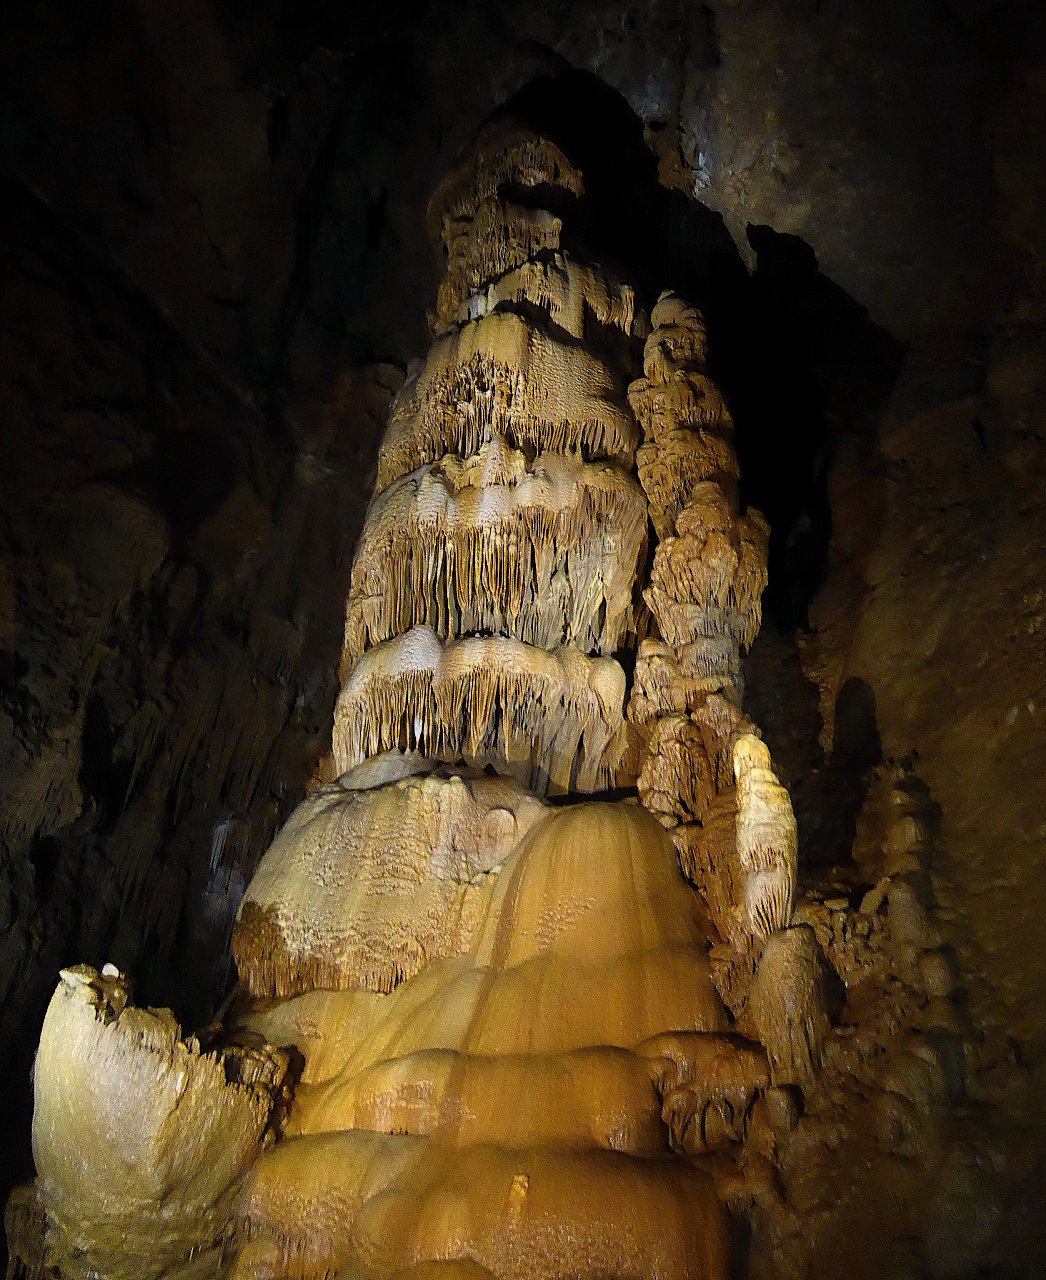 Krasnohorska Cave, Best places to visit in Slovakia